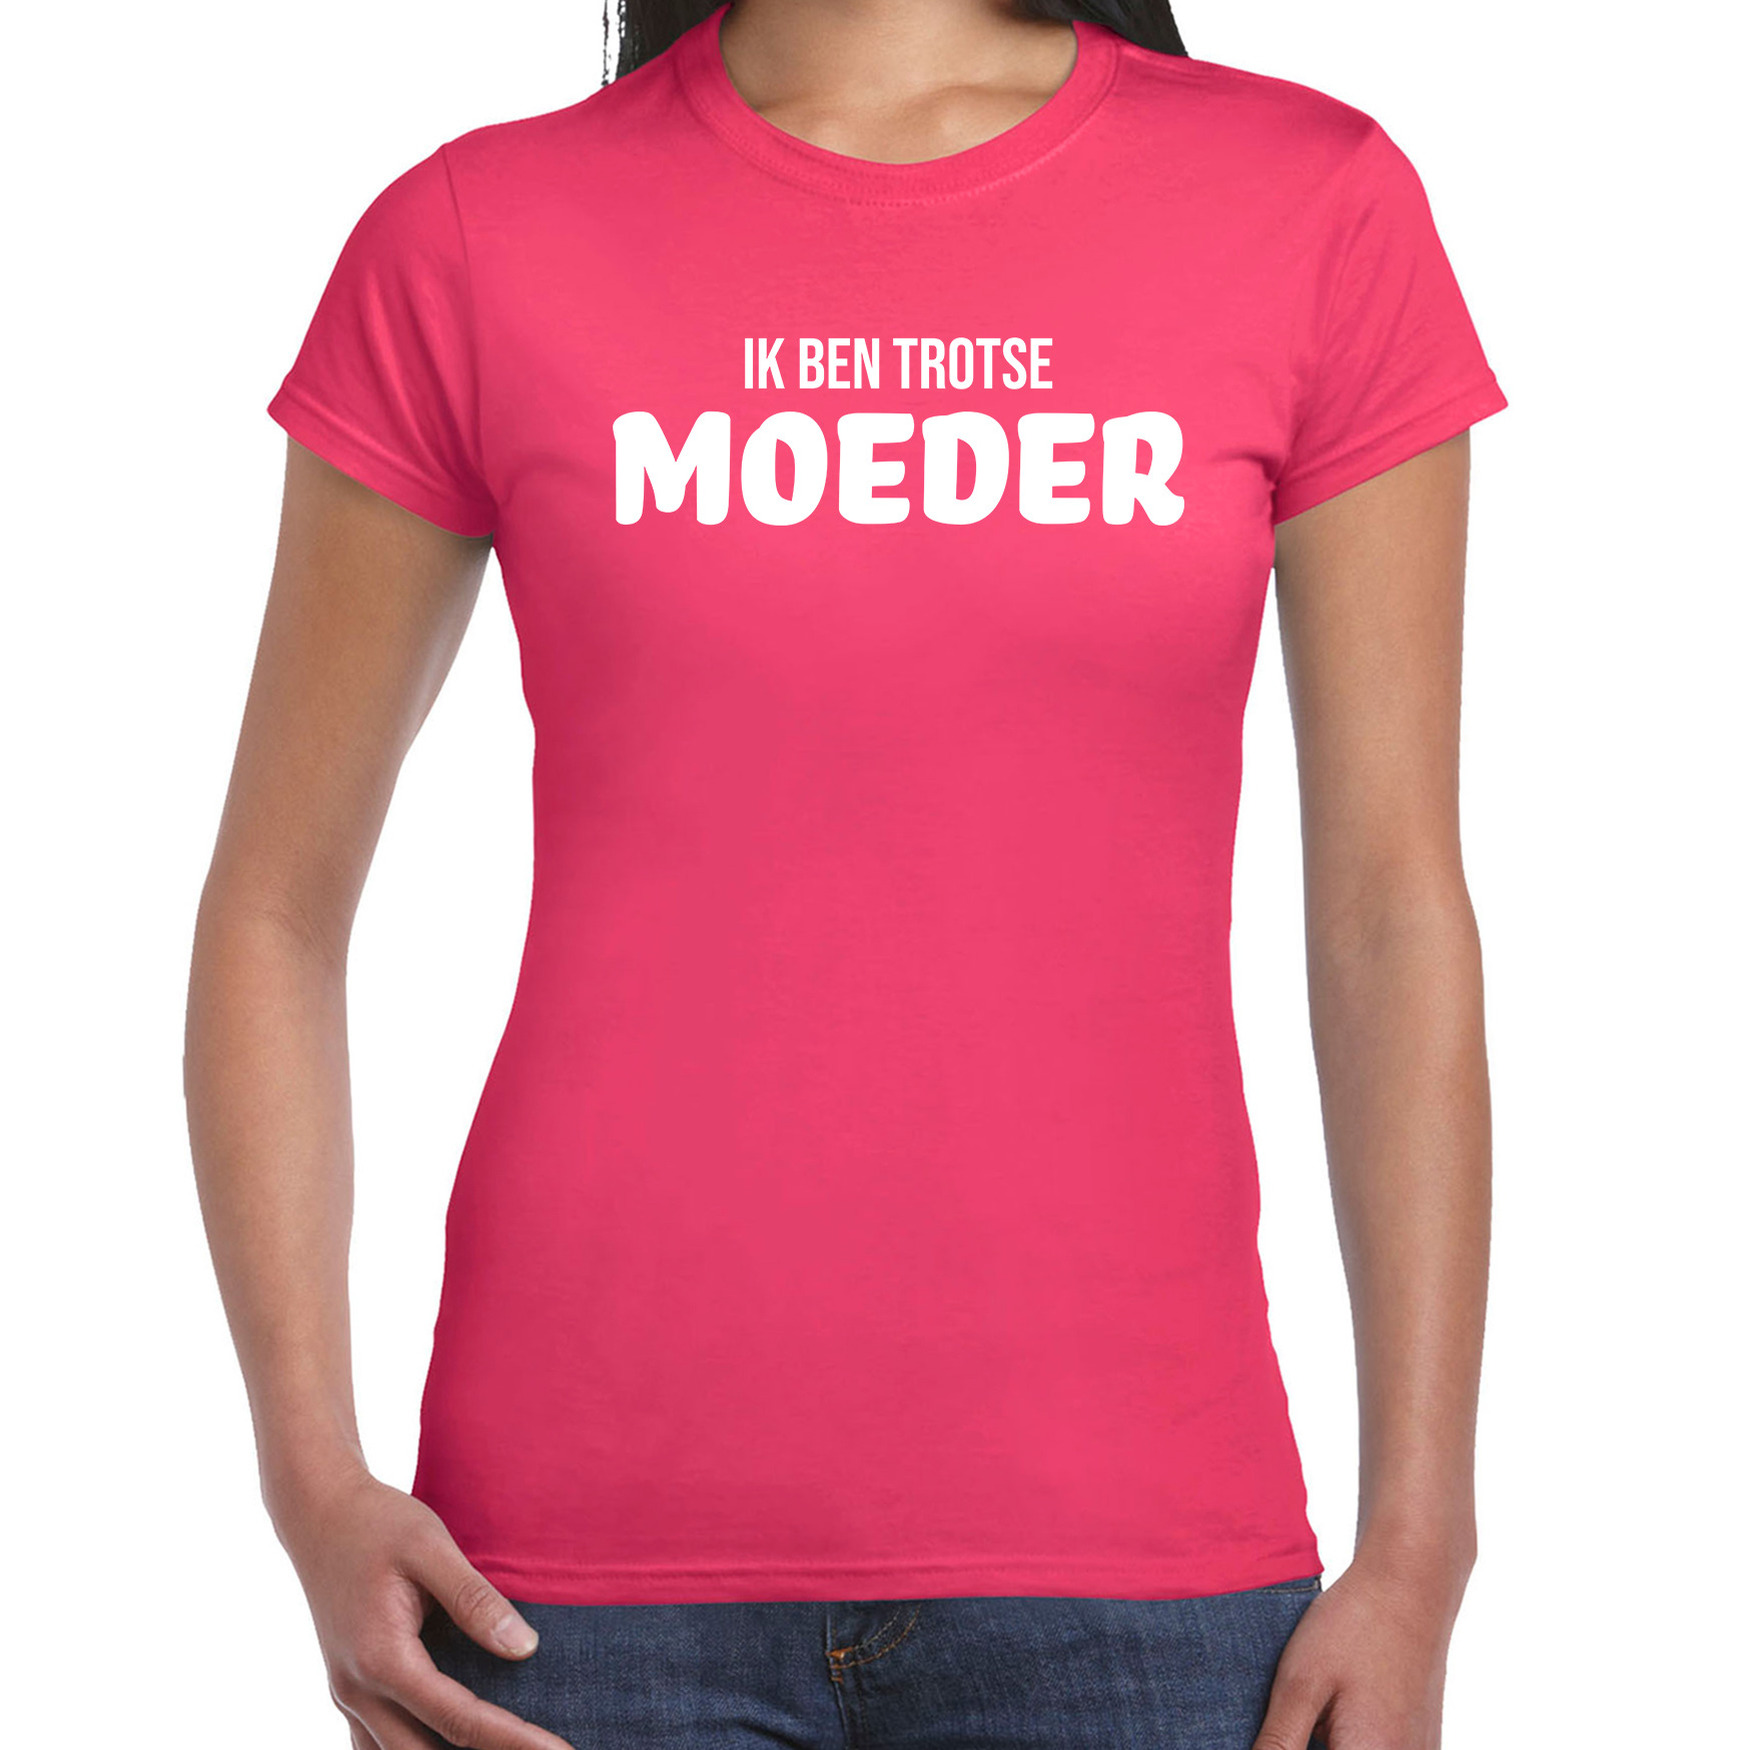 Ik ben trotse moeder t-shirt fuchsia roze voor dames moederdag cadeau shirt mama